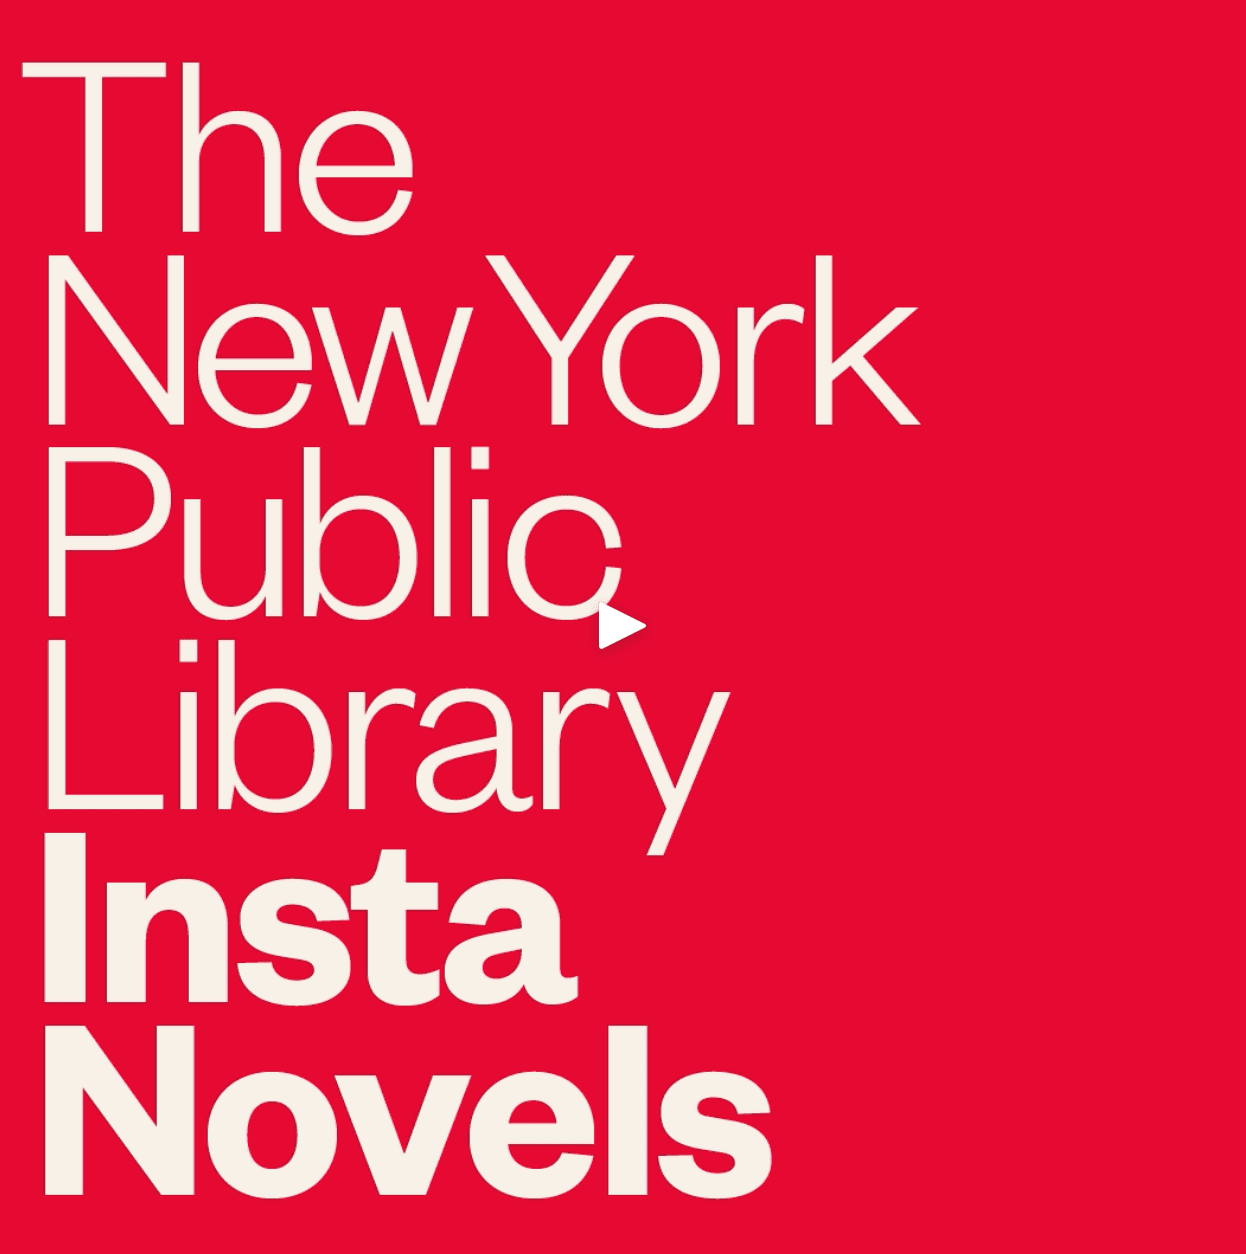 New York Public Library Insta Novels teaser post screenshot